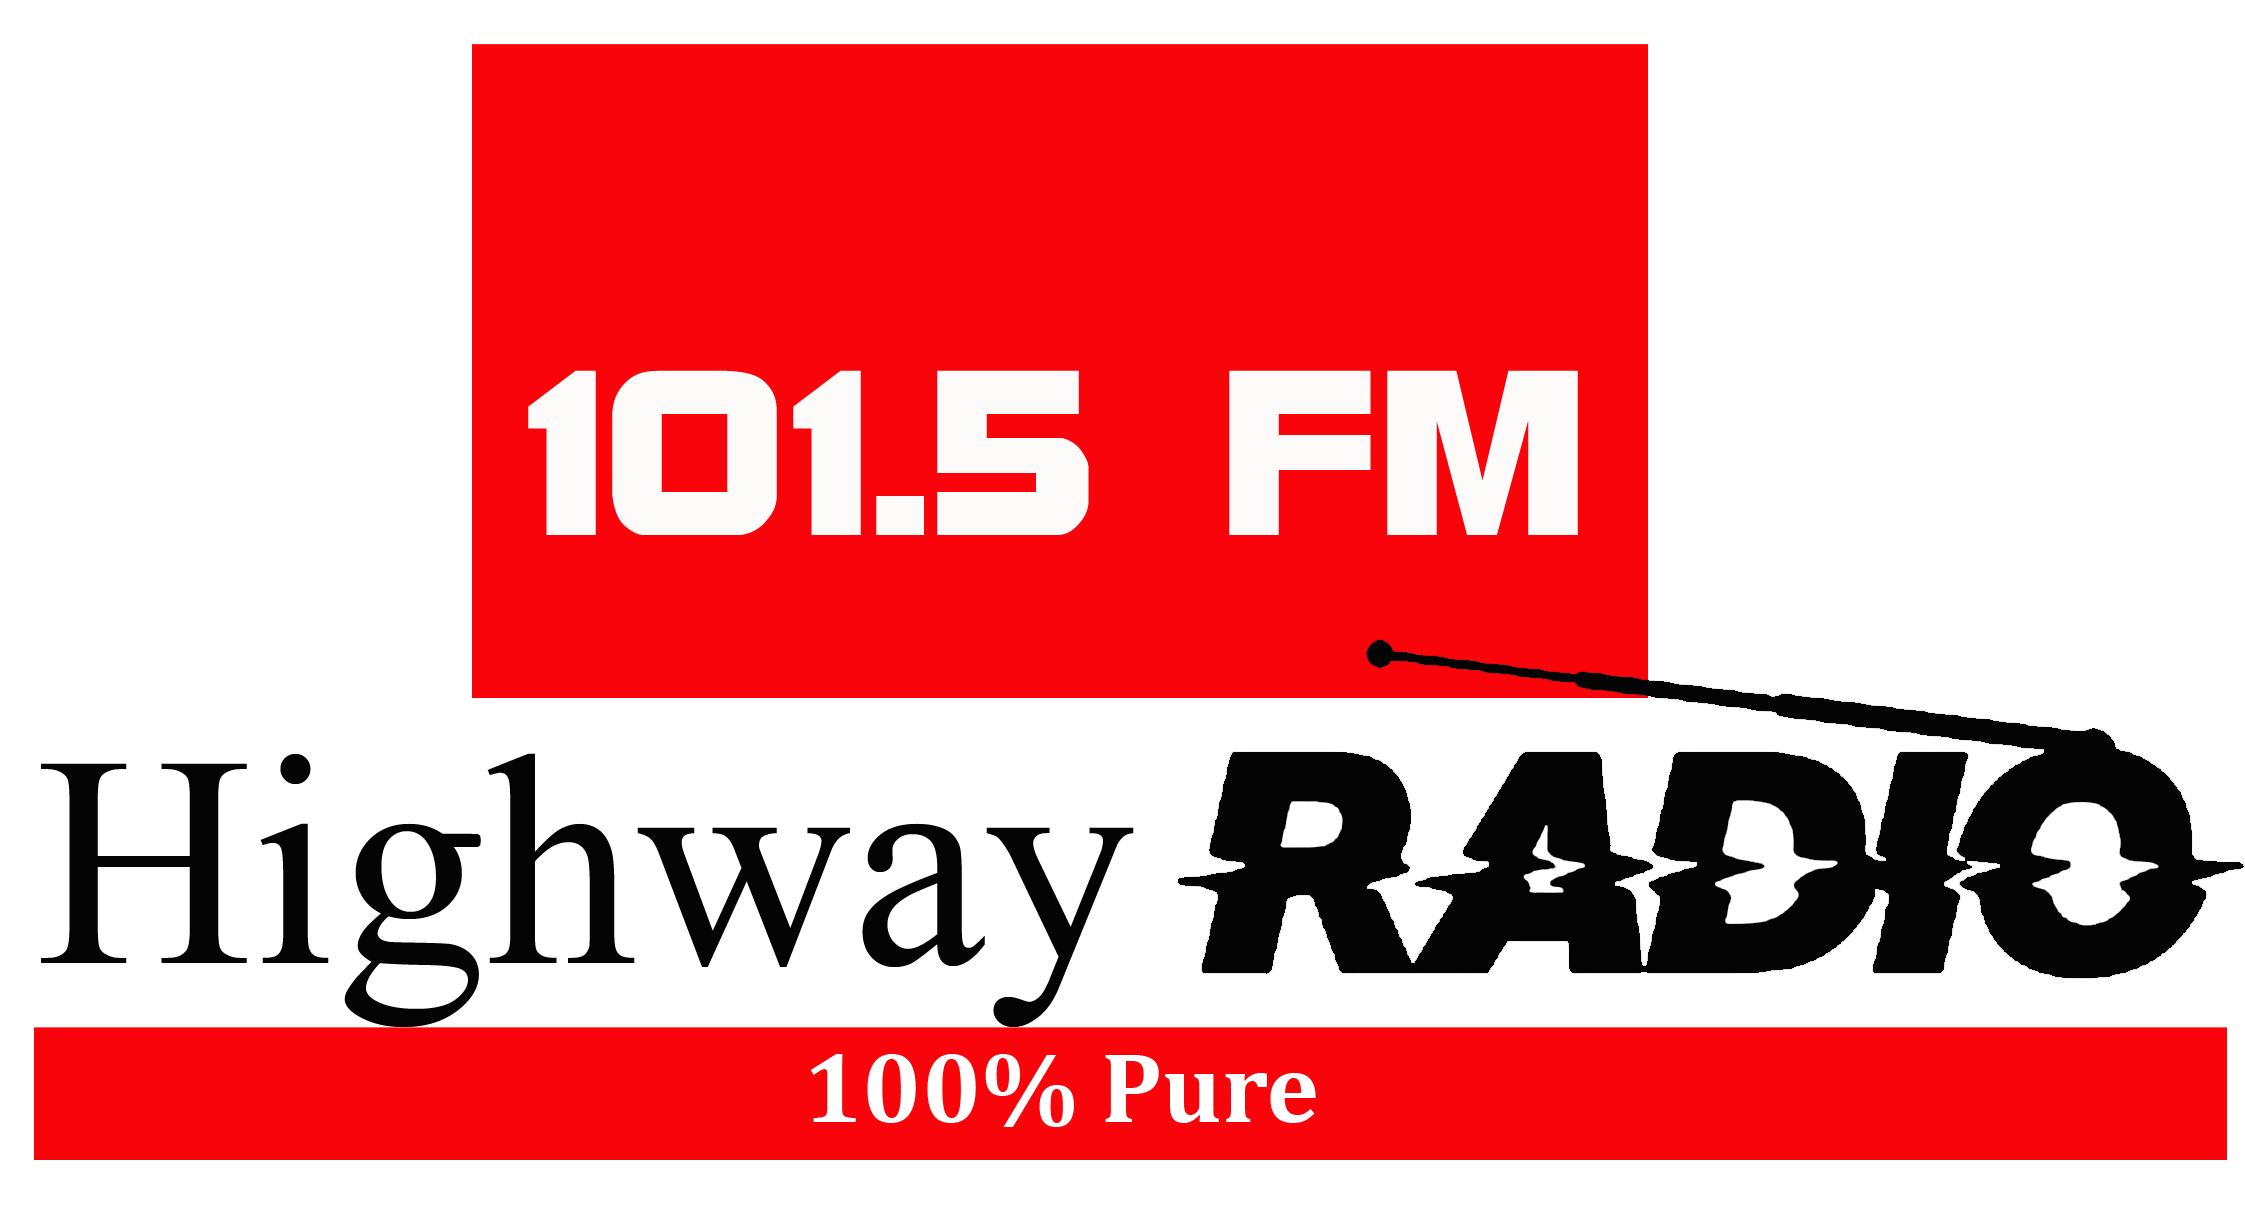 Highway Logo - highwayradio logo | Highway Radio 101.5 FM